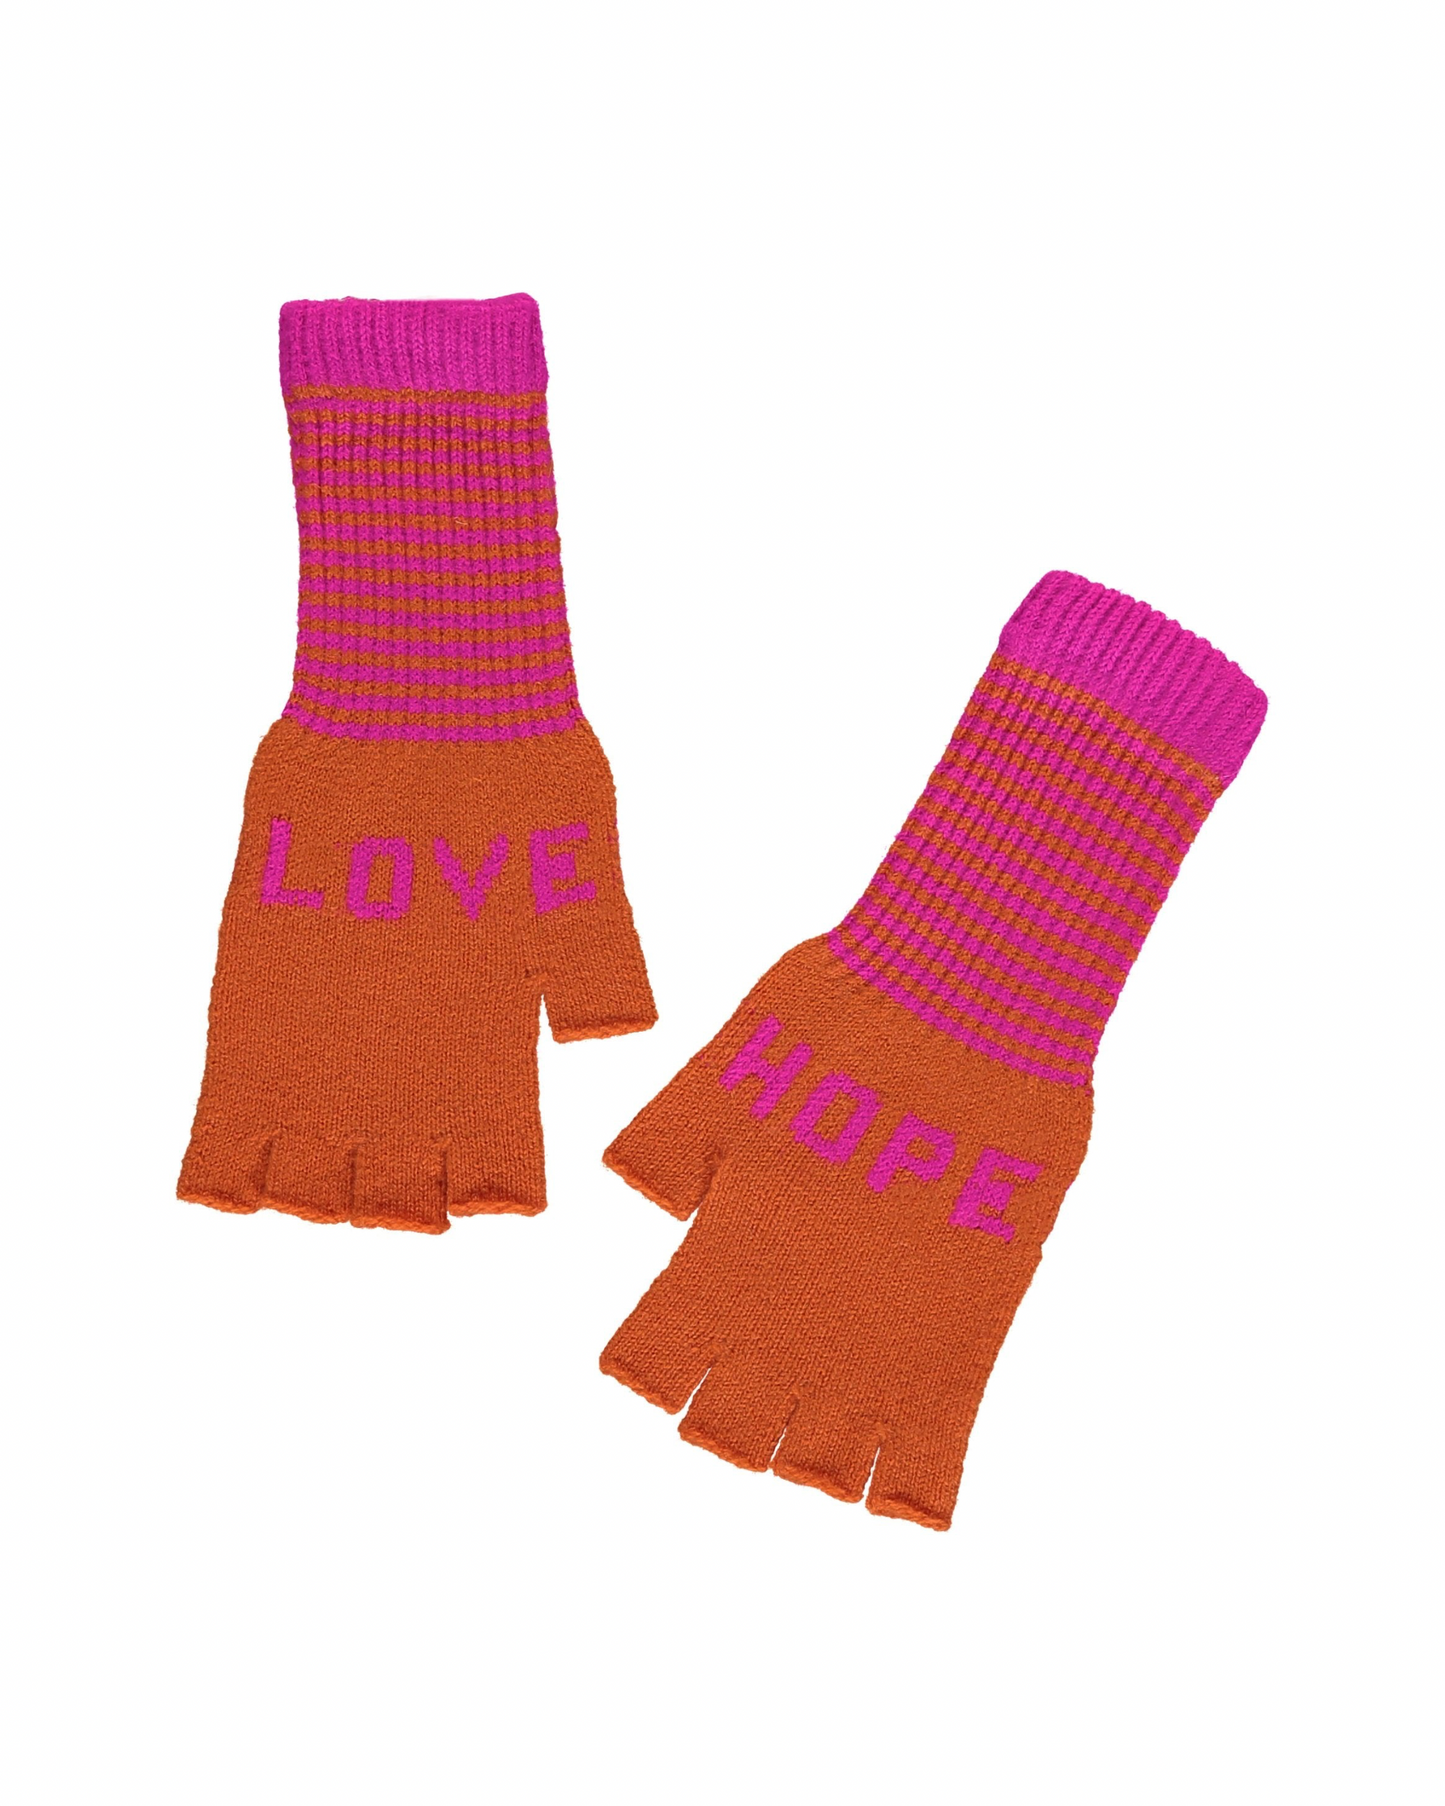 Fingerless Love Hope Gloves in Orange and Fuchsia Pink